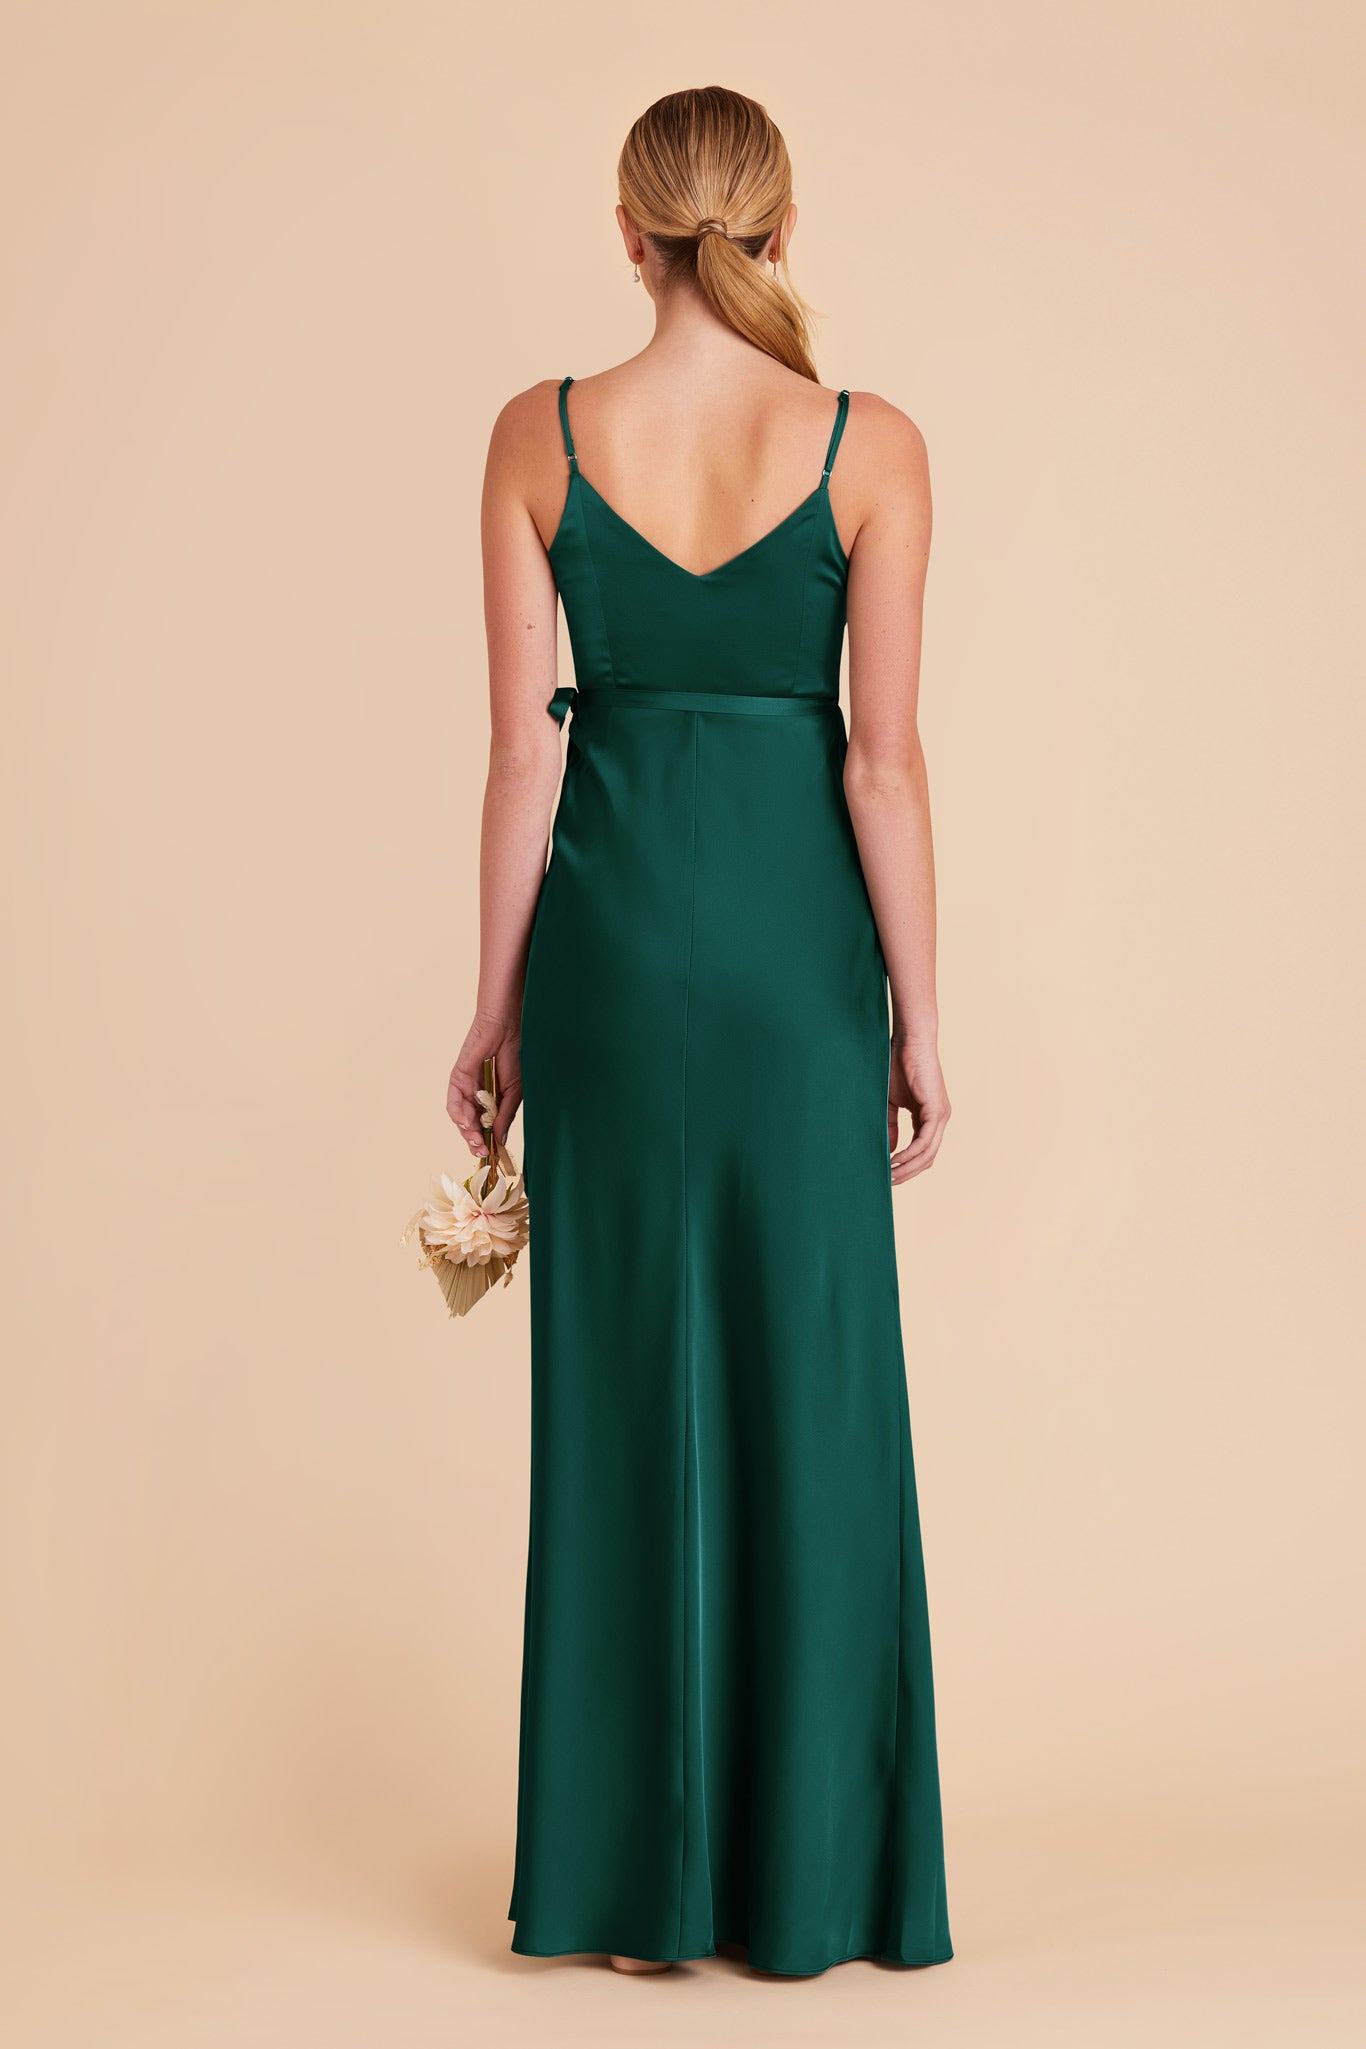 Emerald Cindy Matte Satin Dress by Birdy Grey